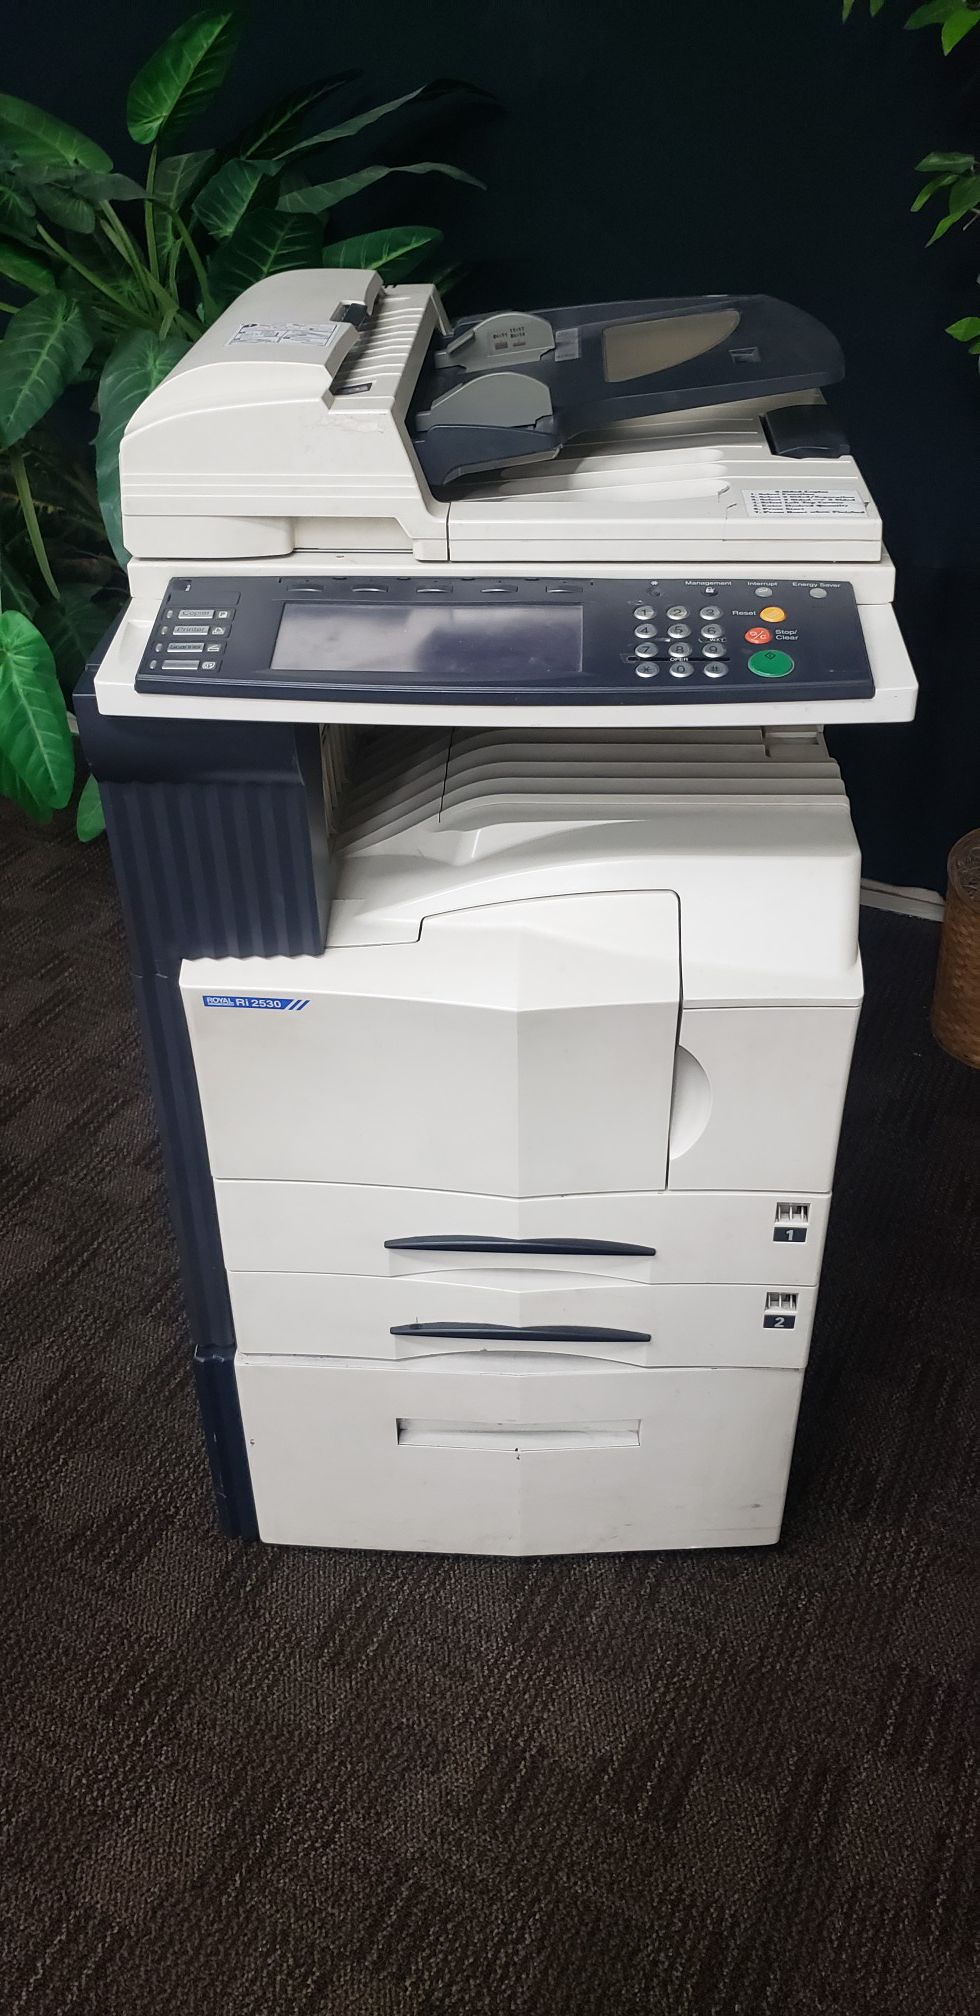 Royal Copy Star - Ri 2530 - Printer Copier Fax